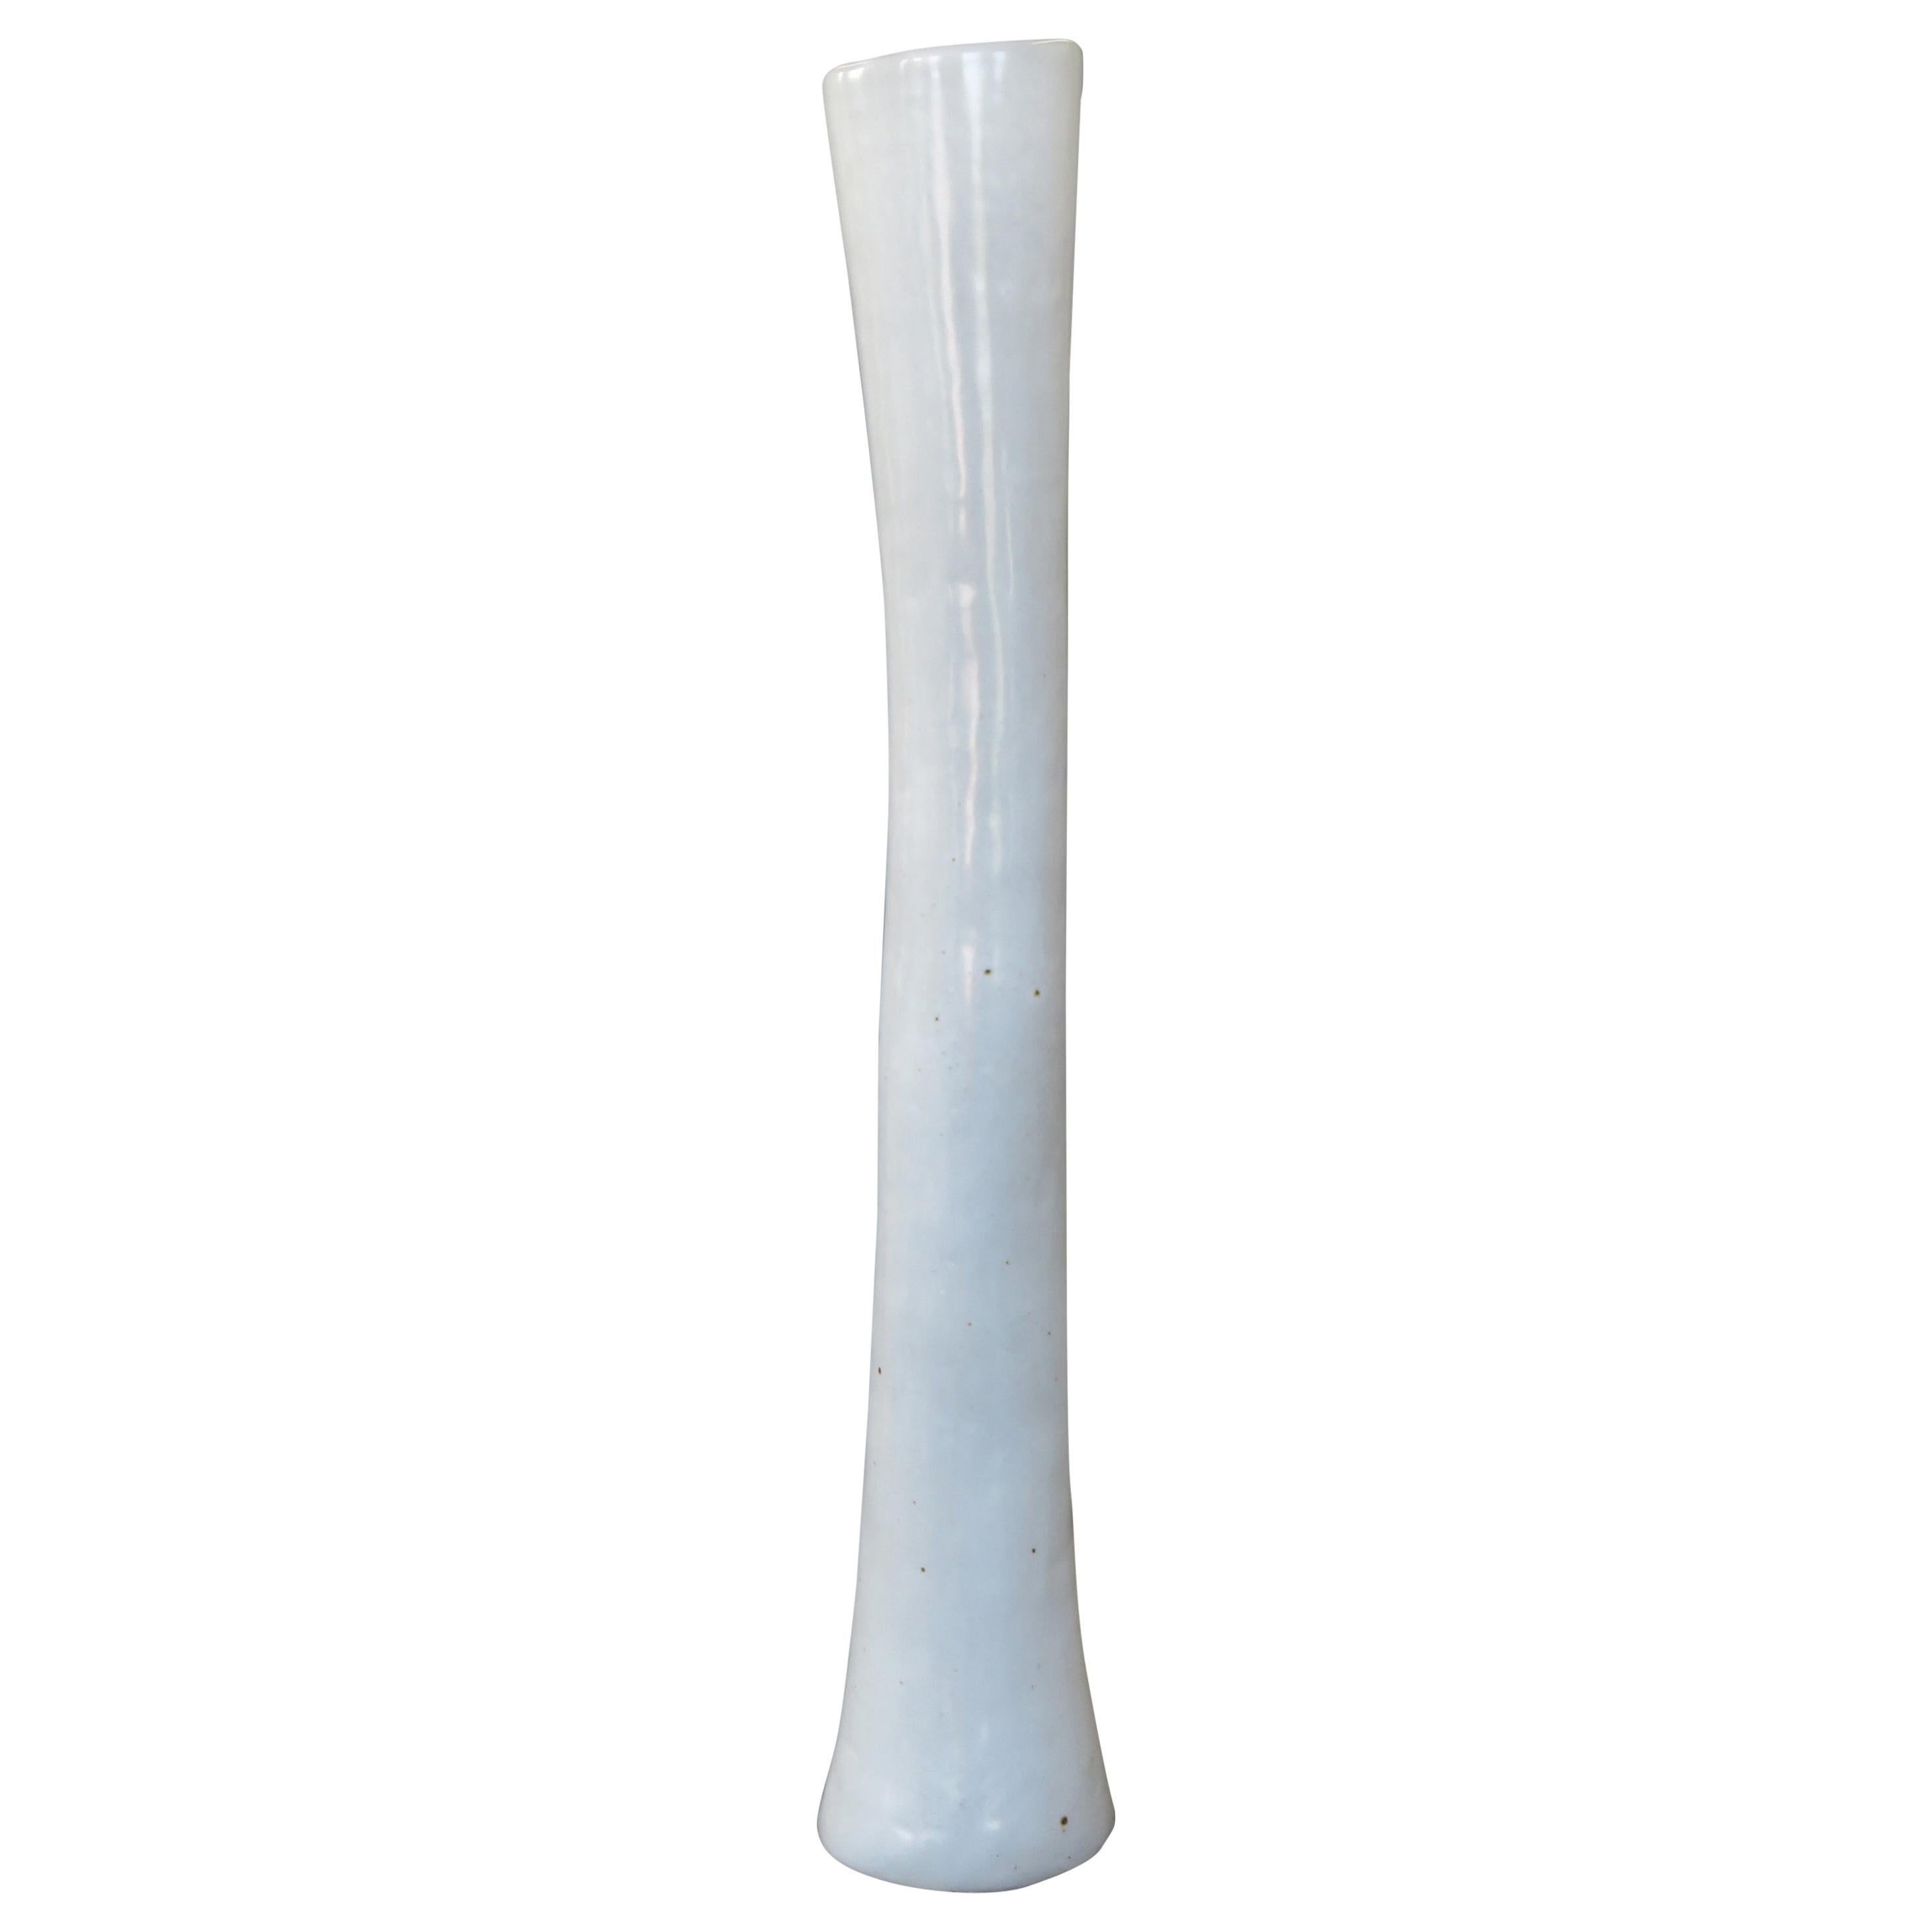 Tubular Handbuilt Ceramic Vase, White Glaze on Stoneware, 22.88 Inches Tall